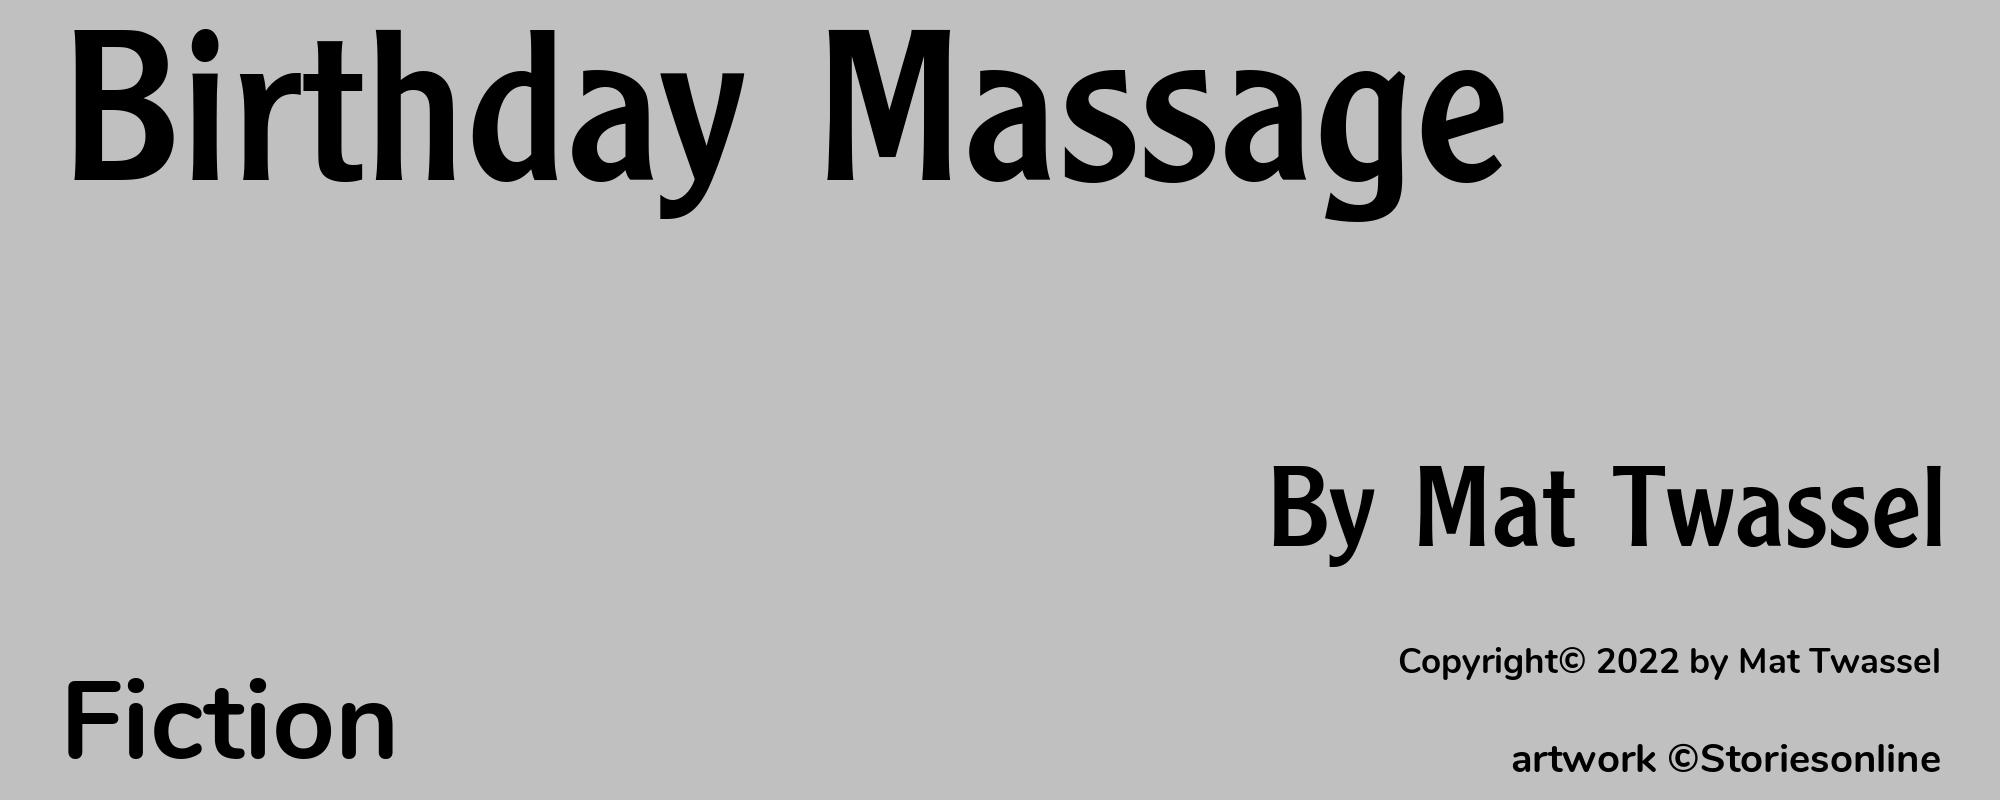 Birthday Massage - Cover